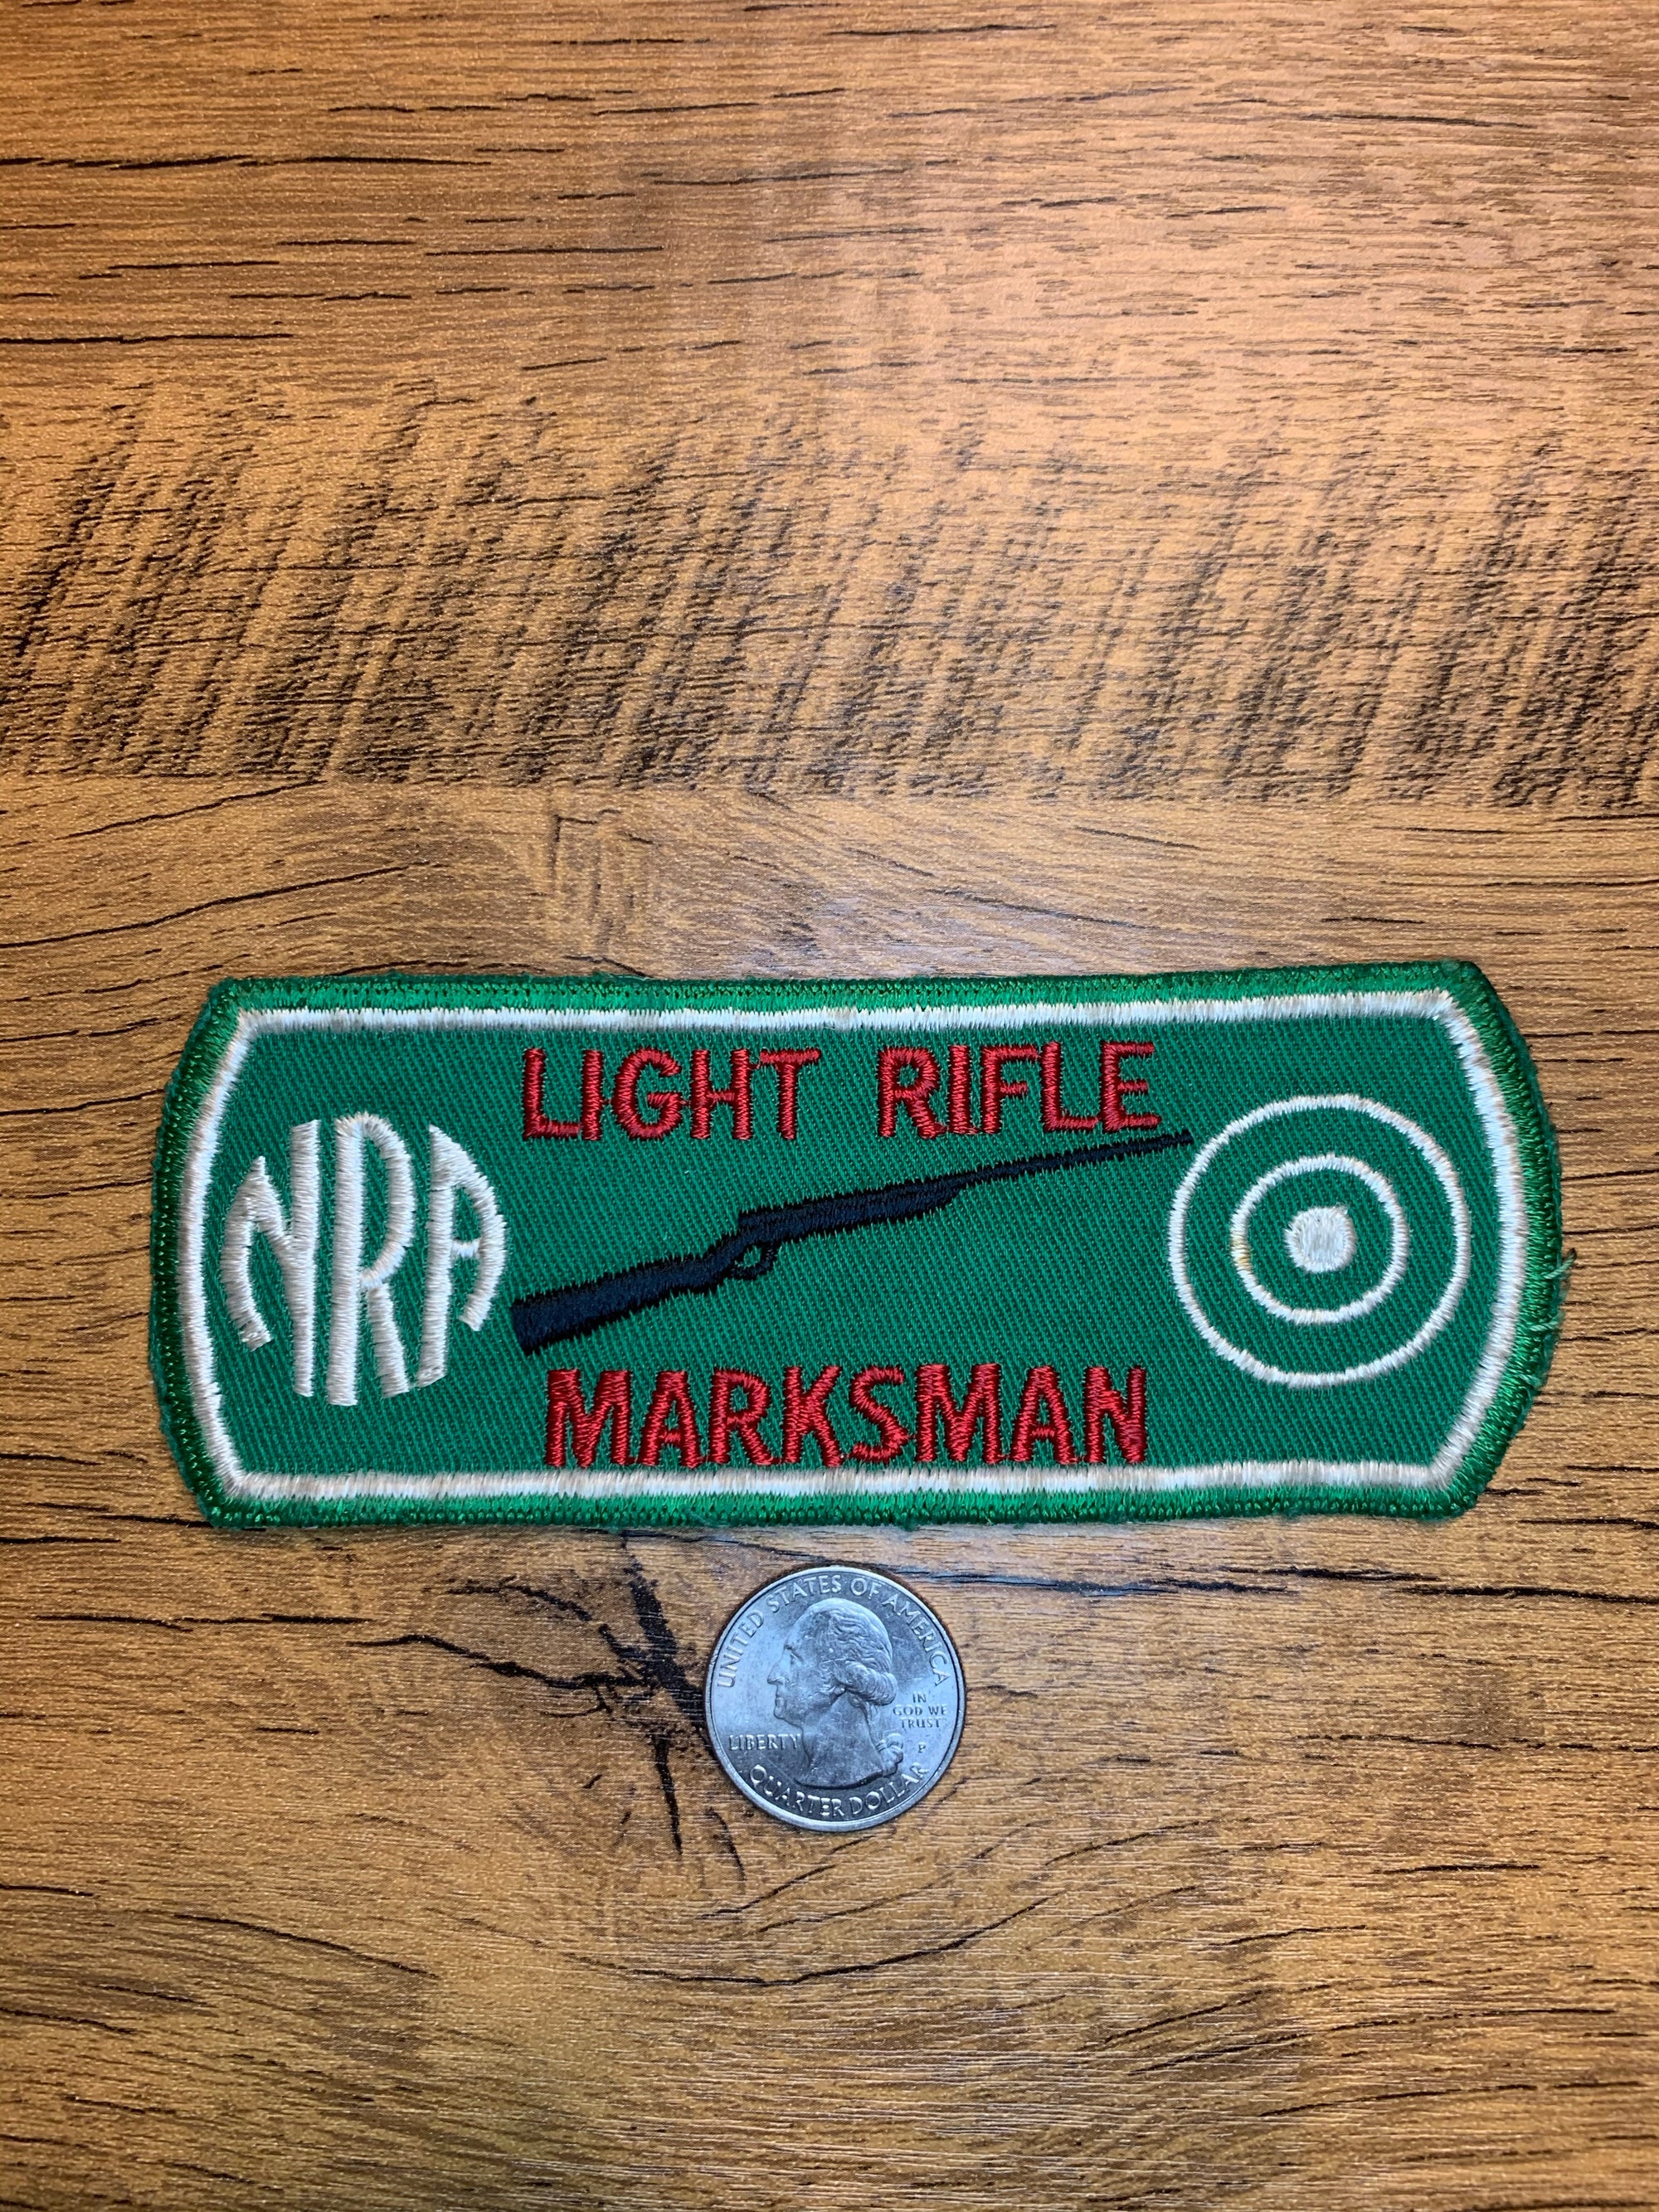 Vintage NRA Light Rifle Marksman